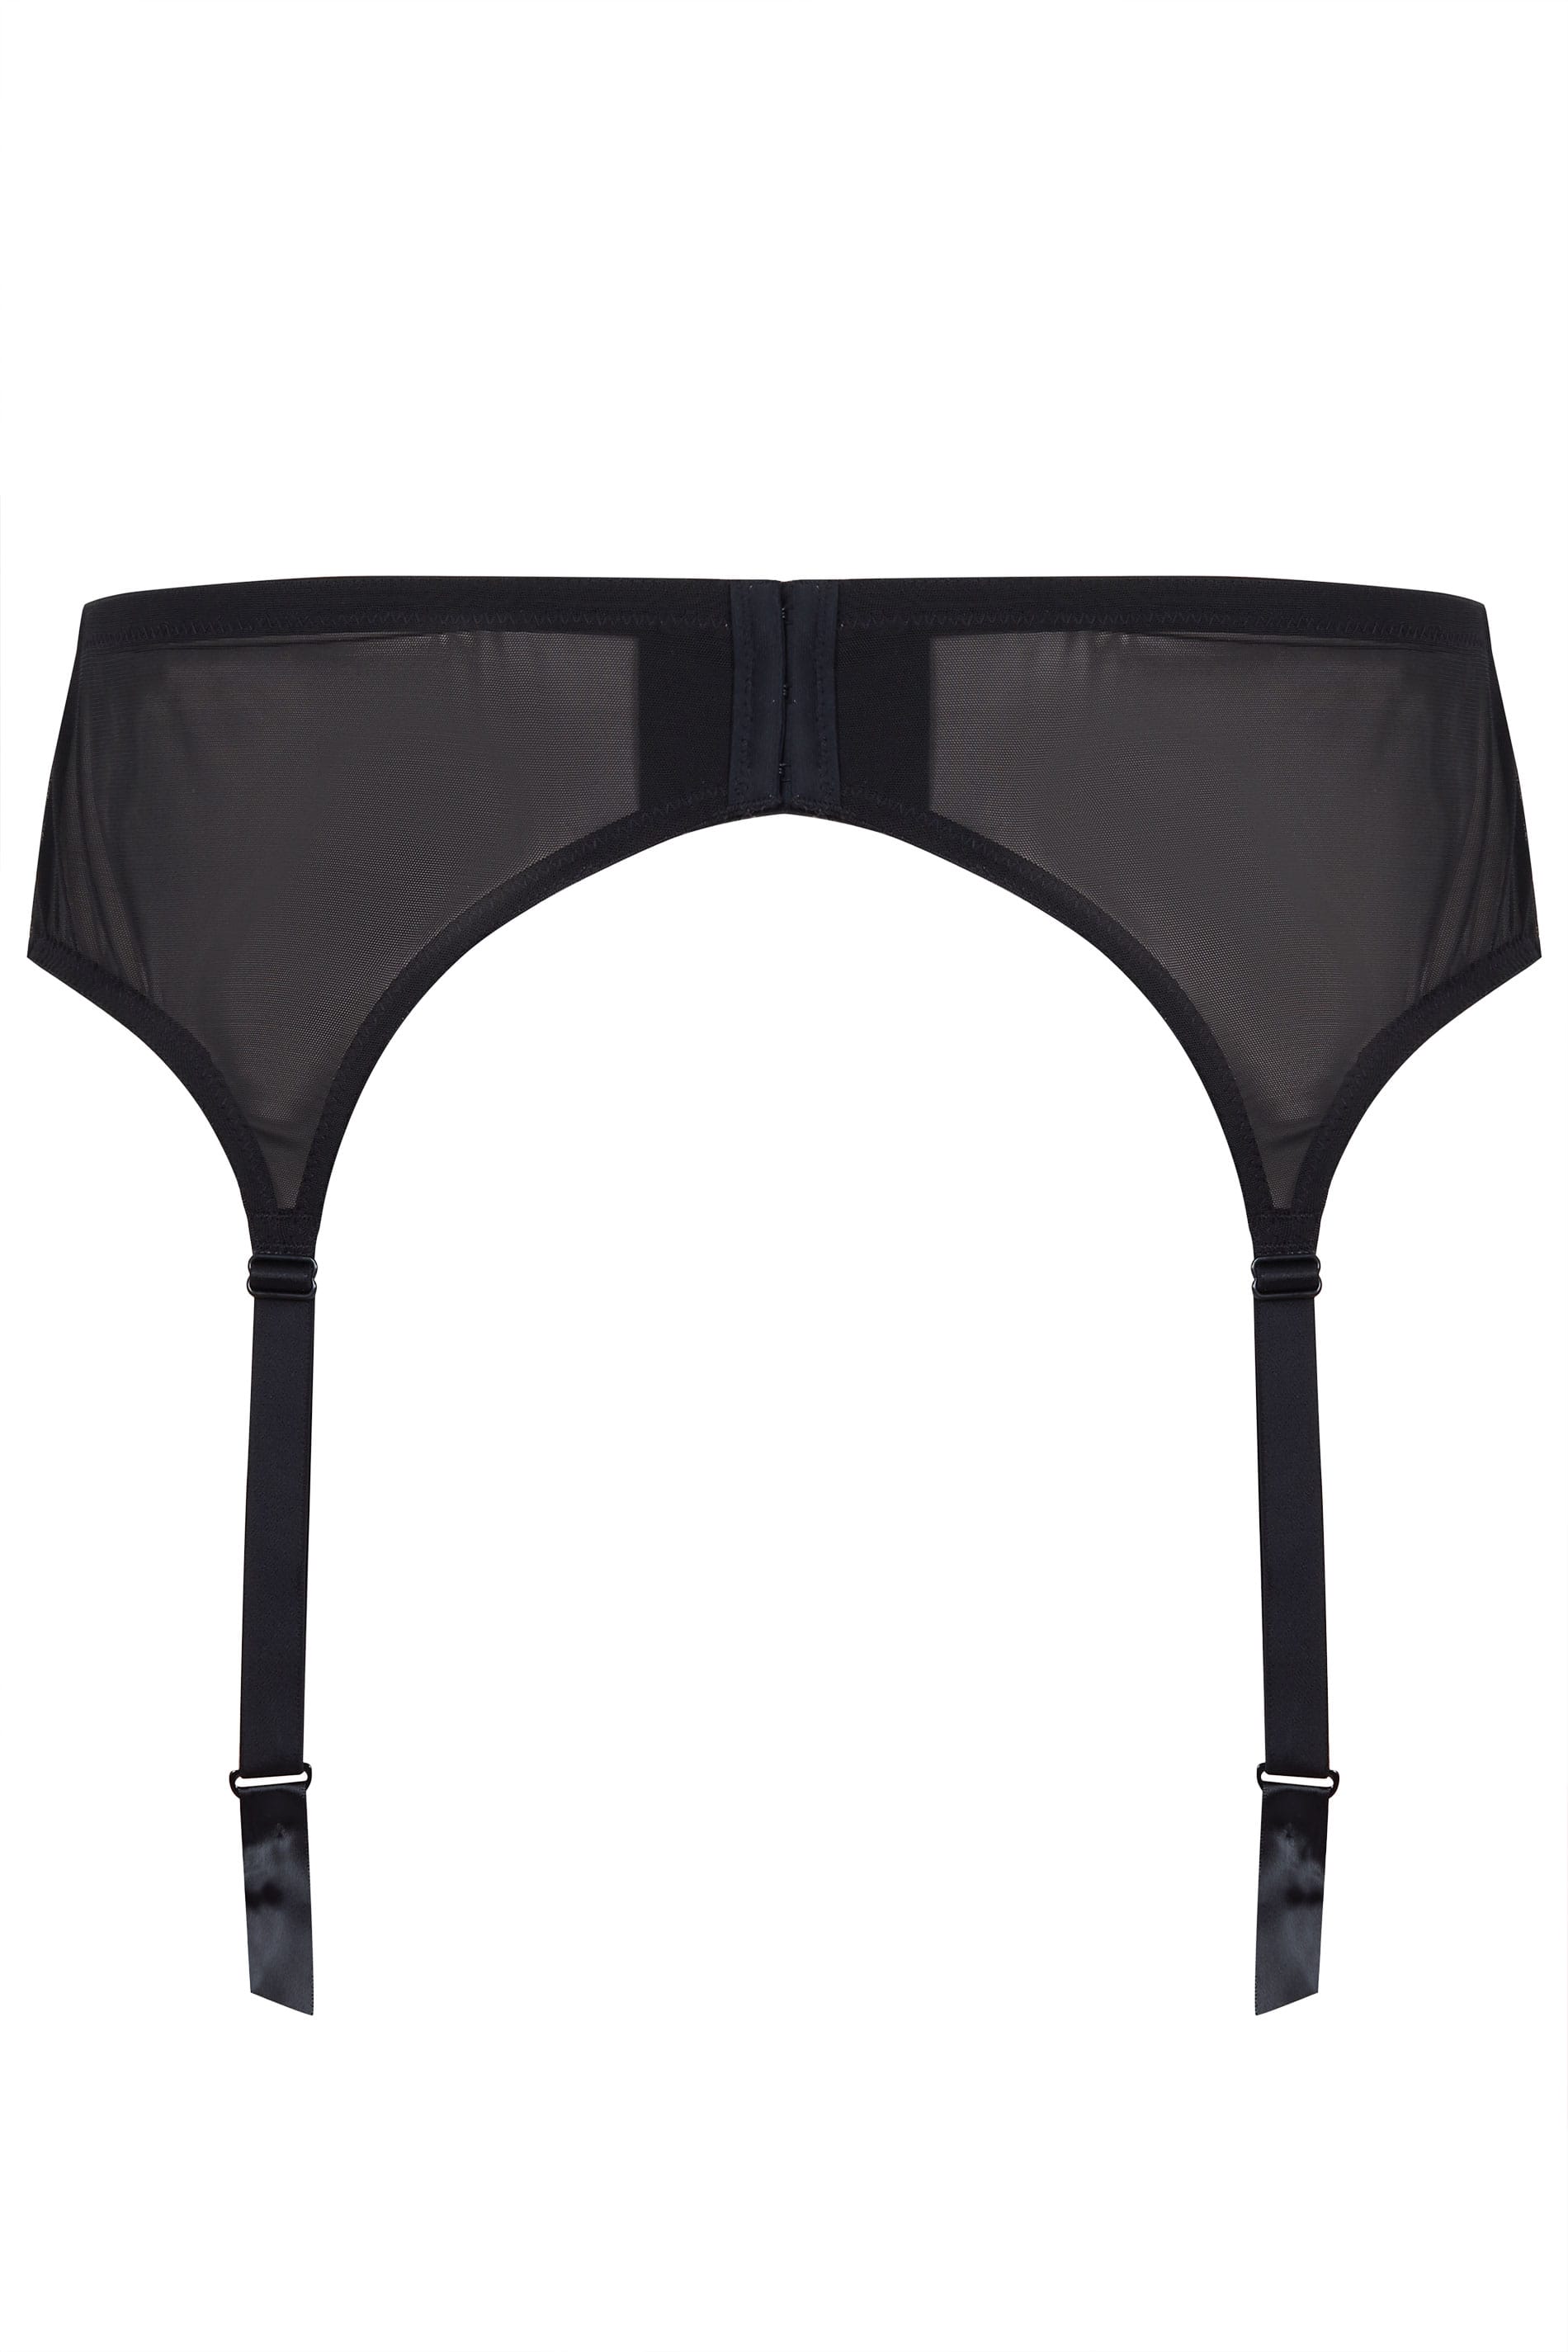 Black Suspender Belt | Plus Sizes 16 to 36 | Yours Clothing